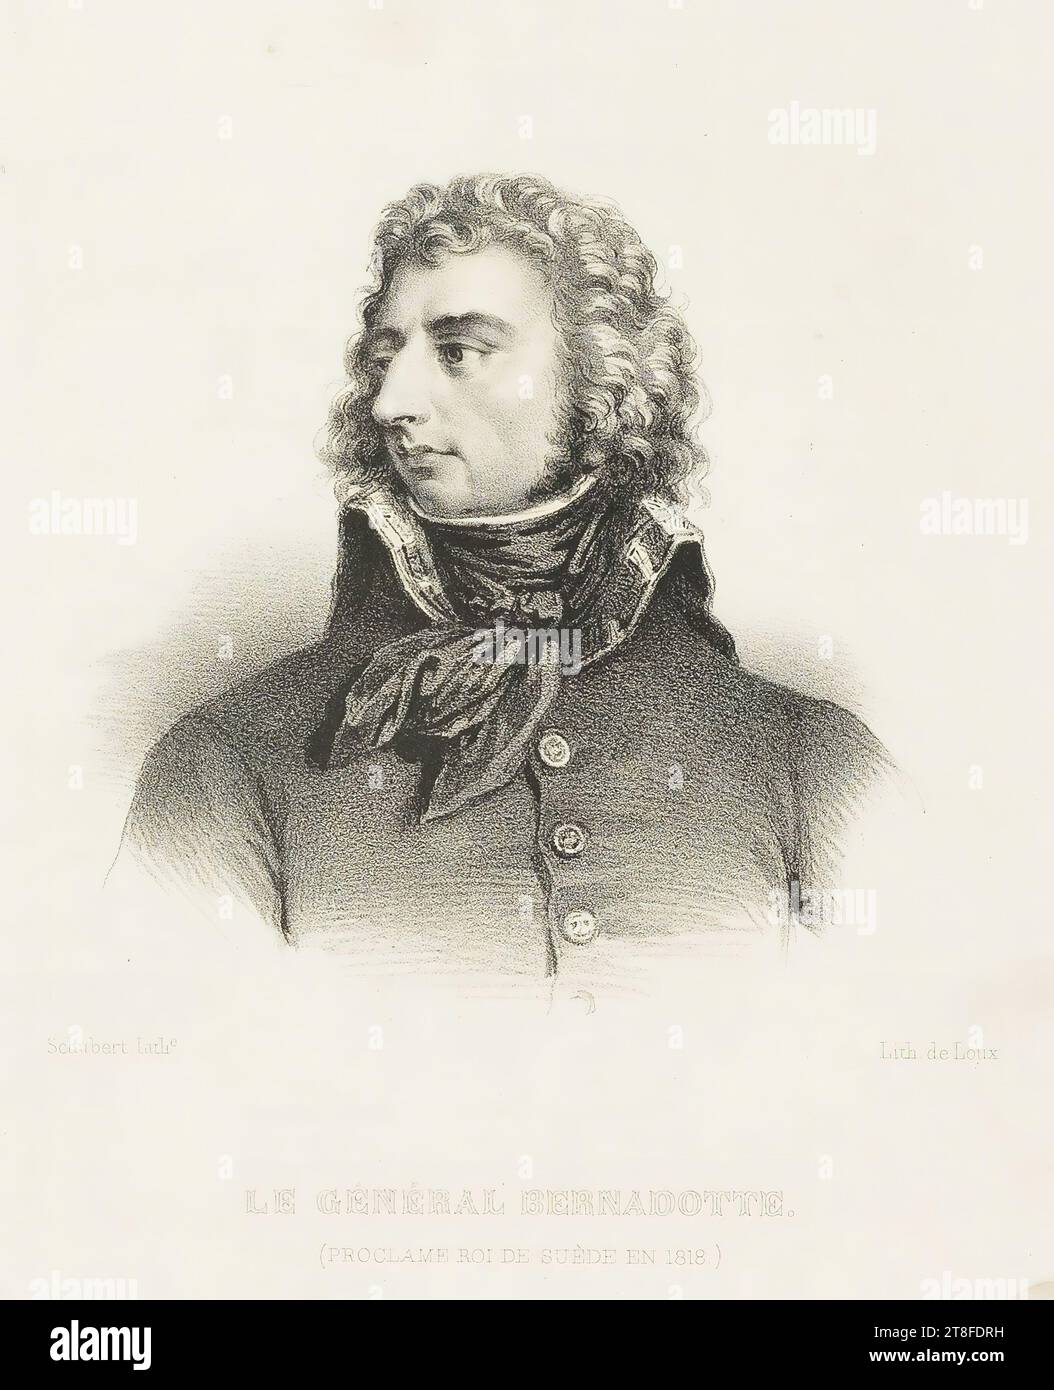 Schubert, Lithe. Lit. of Loux. GENERAL BERNADOTTE., (PROCLAMATION KING OF SWEDEN IN 1818 Stock Photo